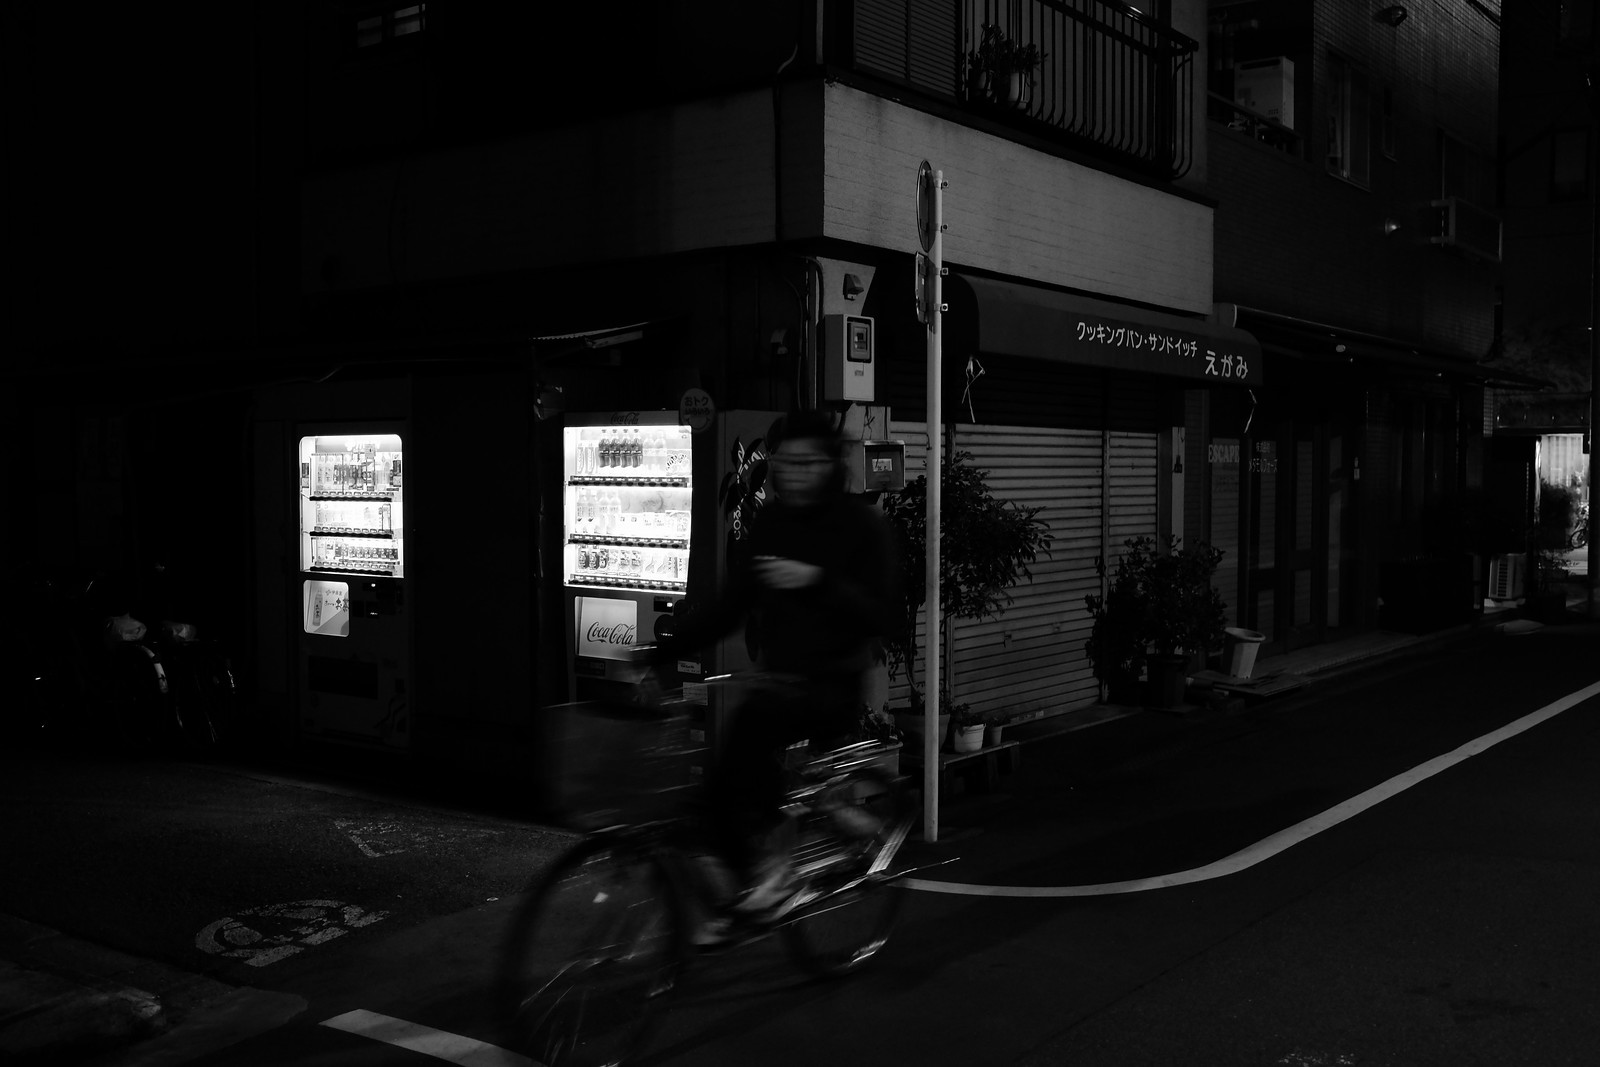 Sumidaku Kinshicho night photo in Tokyo, Japan.